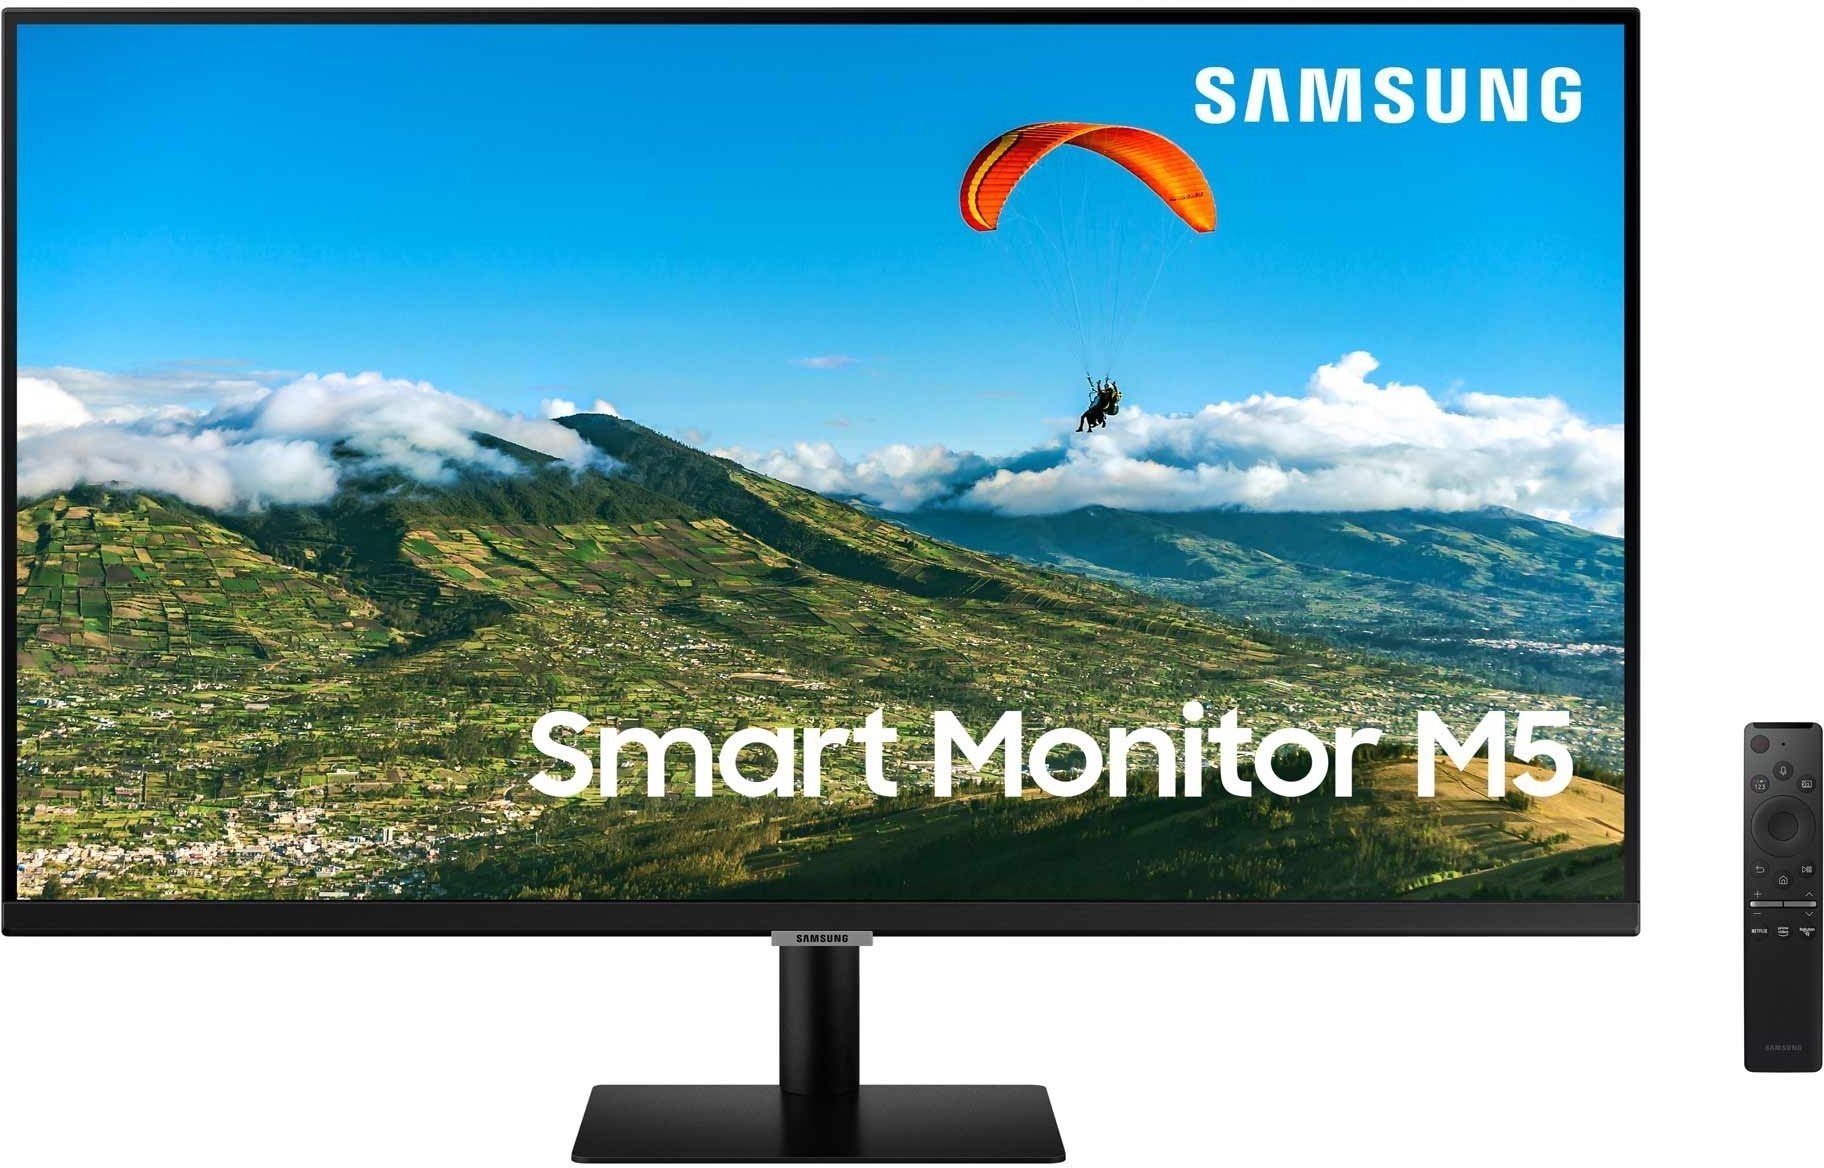 LCD Monitor 32“ Samsung Smart Monitor M5 Screen